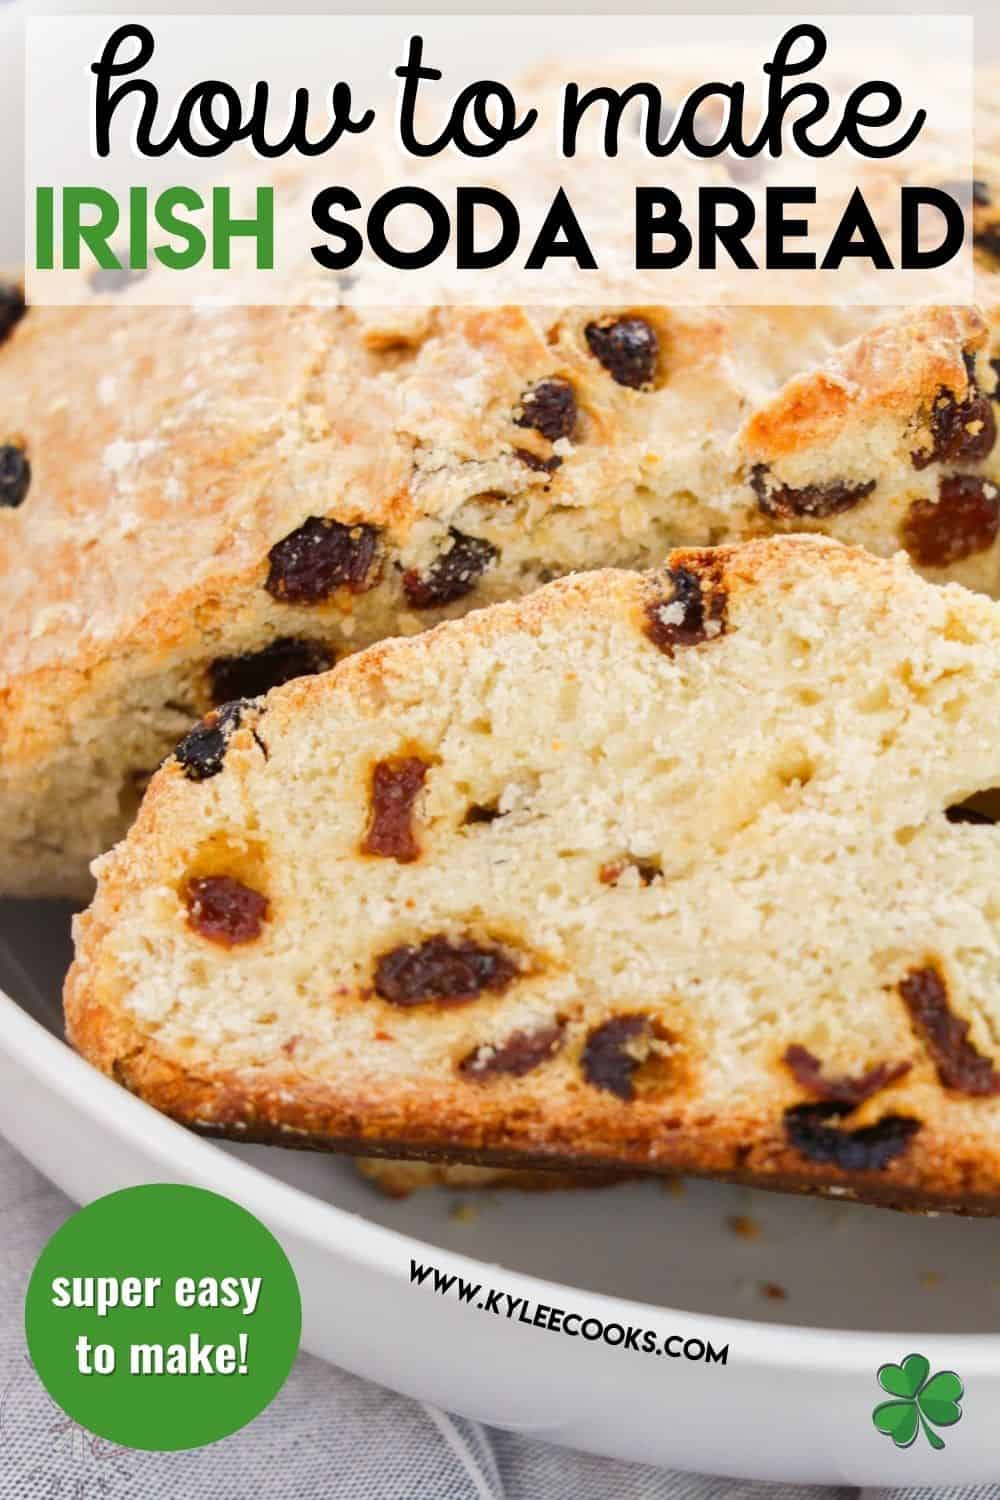 irish soda bread with recipe text overlaid